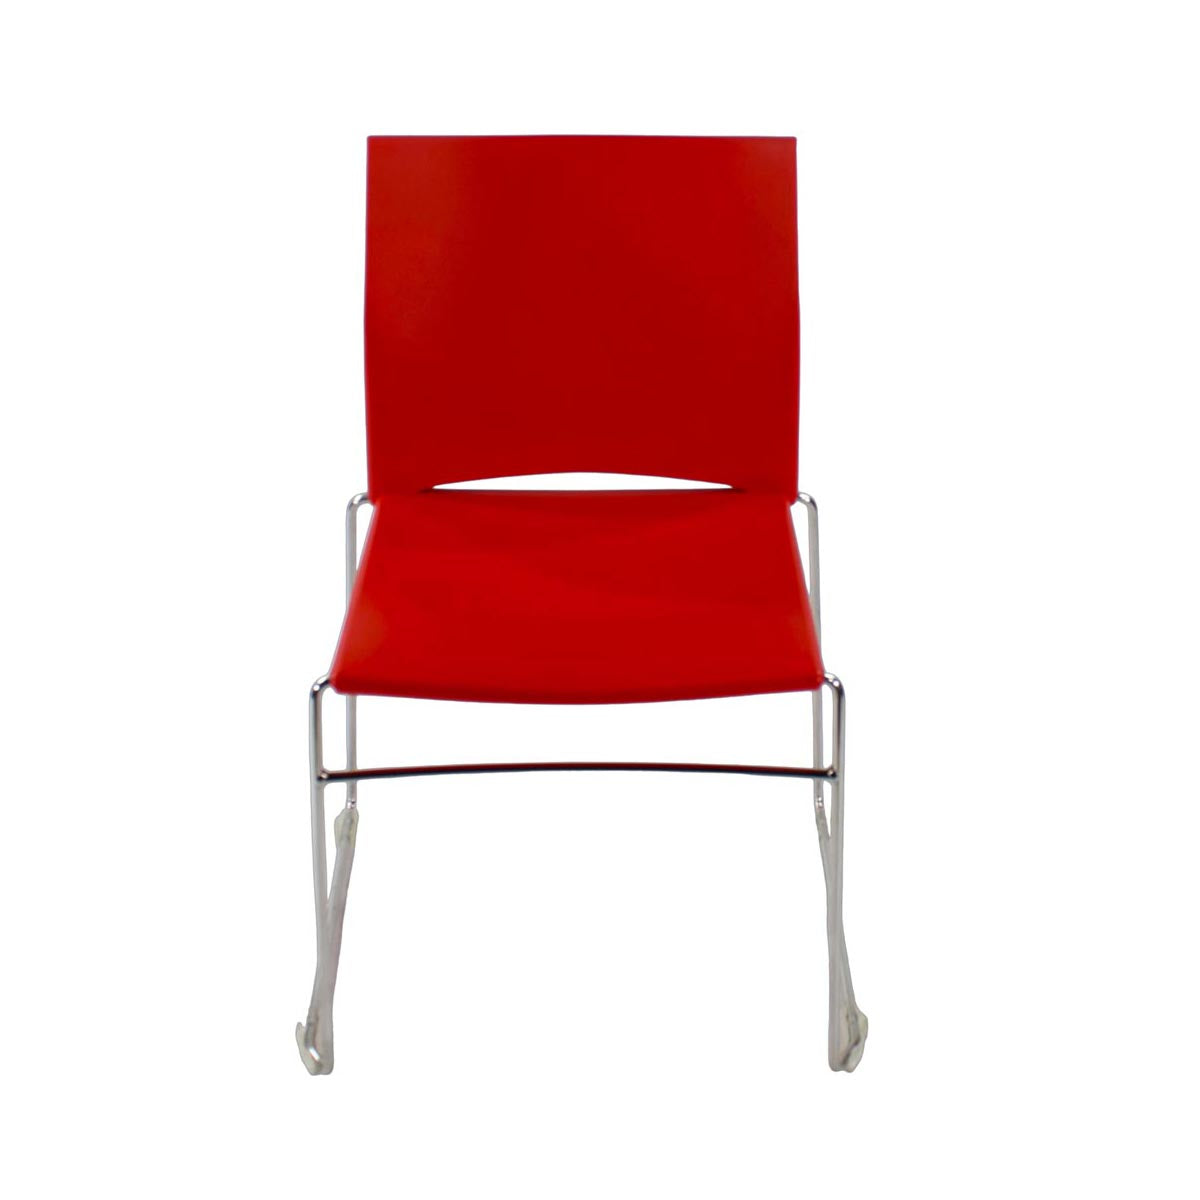 Herman Miller : Chaise empilable Pronta en rouge - Remis à neuf